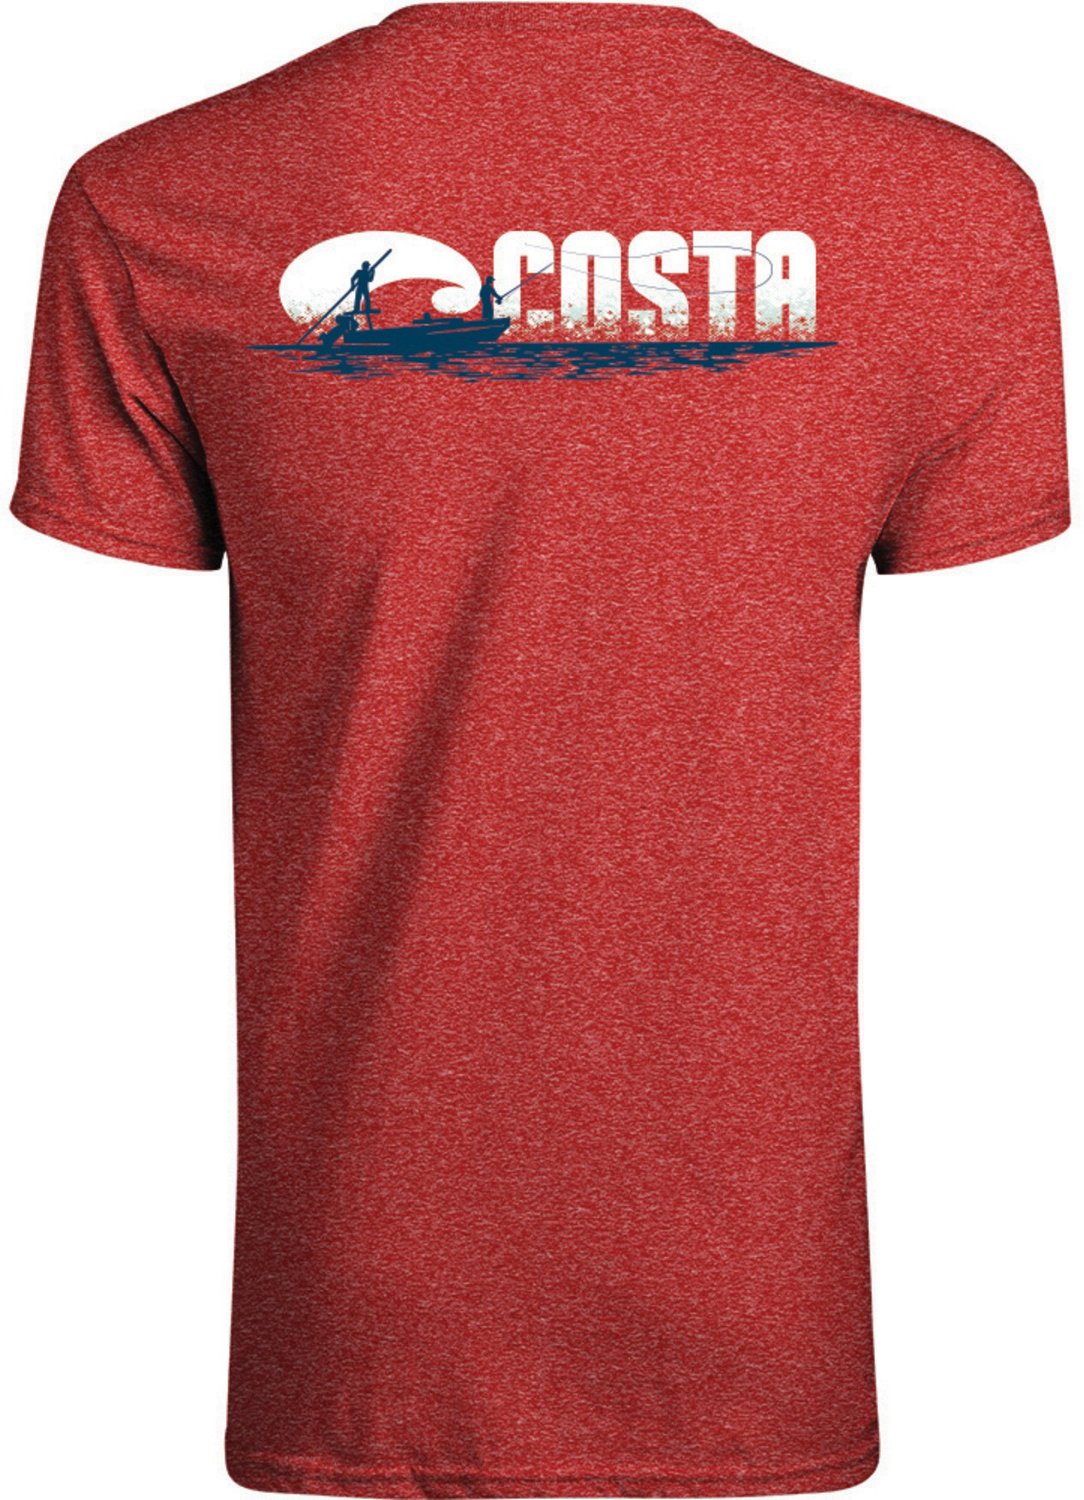 Costa Men's Shirts  Price Match Guaranteed